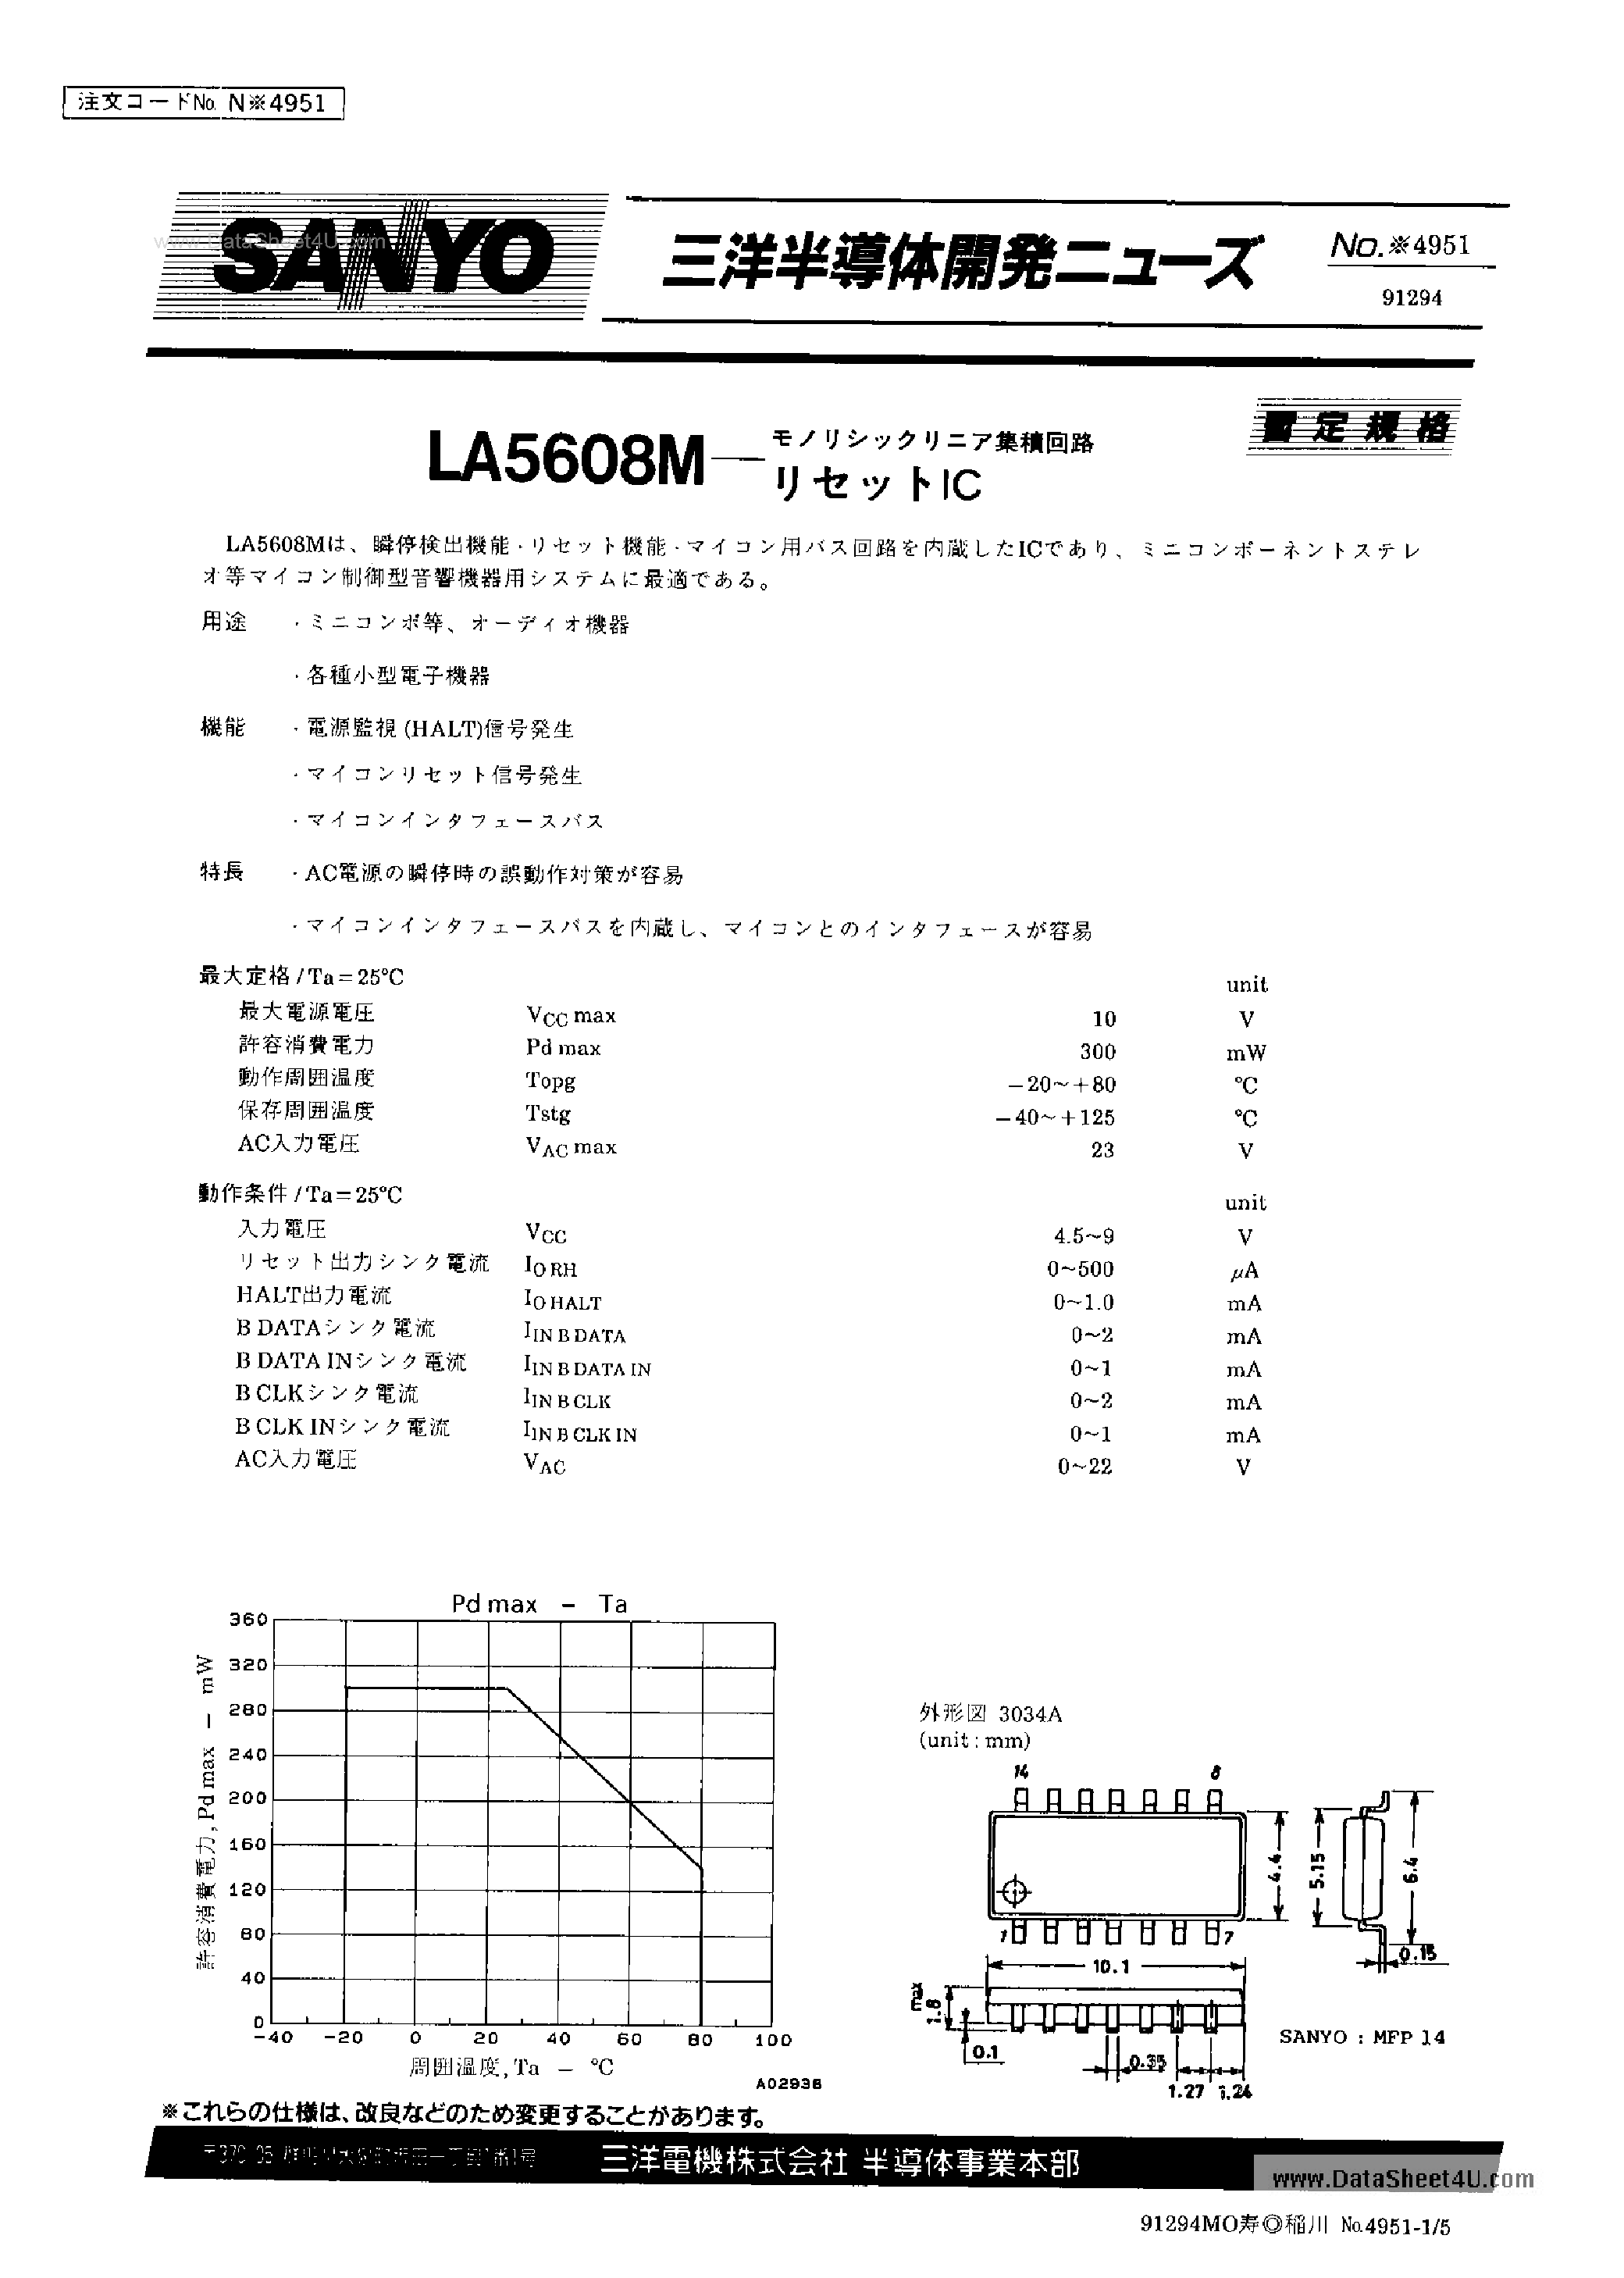 Даташит LA5608M - Regulator Monitor Signal Generator страница 1